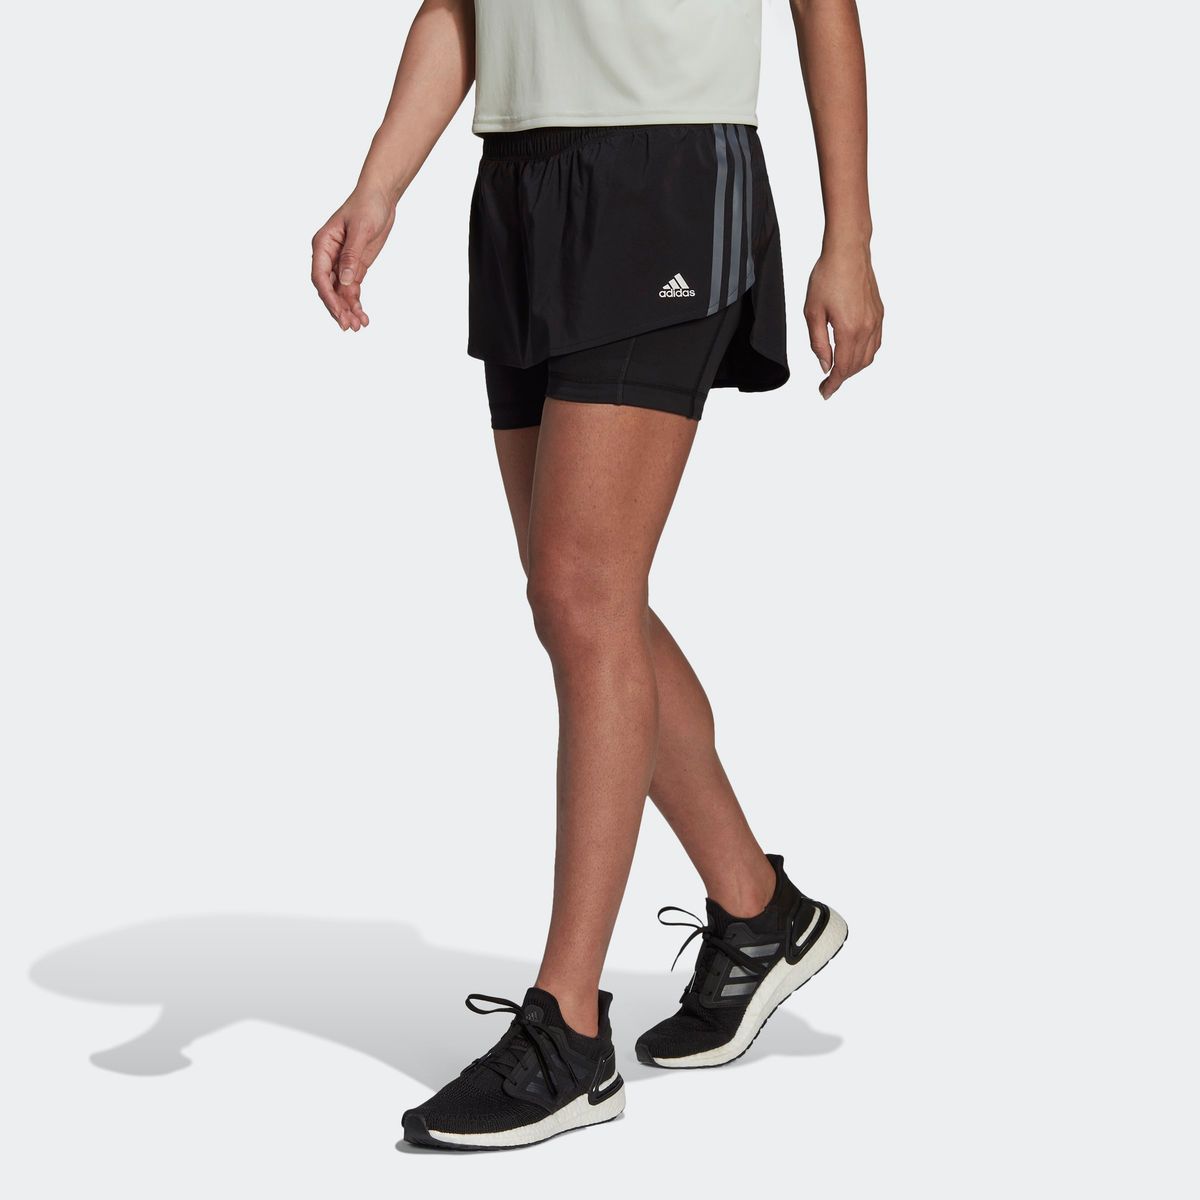 QUEENIEKE Ultra Jupe avec Shorts de Sport Jupe de Gym Sport Tennis pour Femmes 